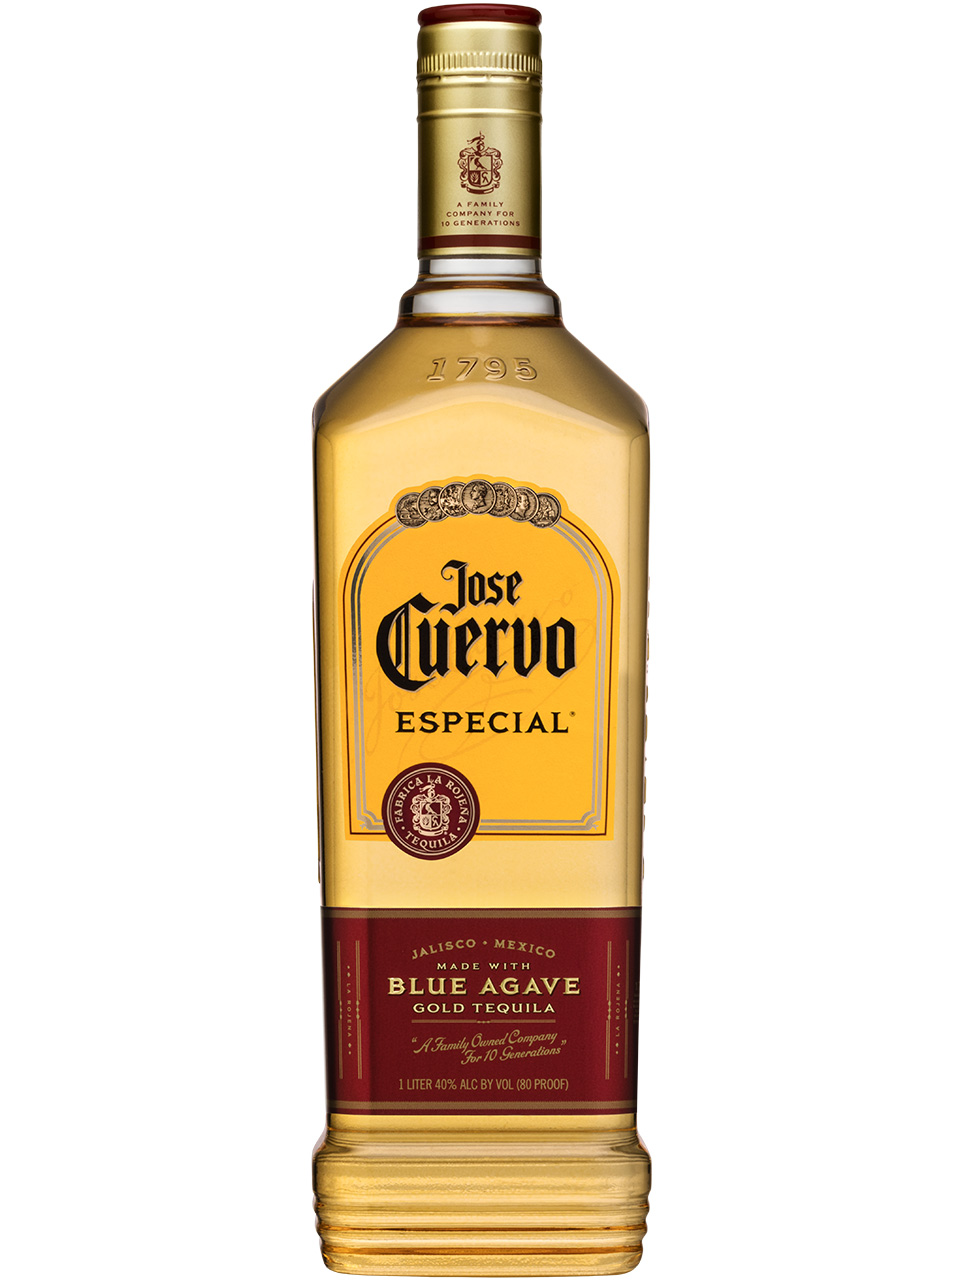 Jose Cuervo Especial Tequila